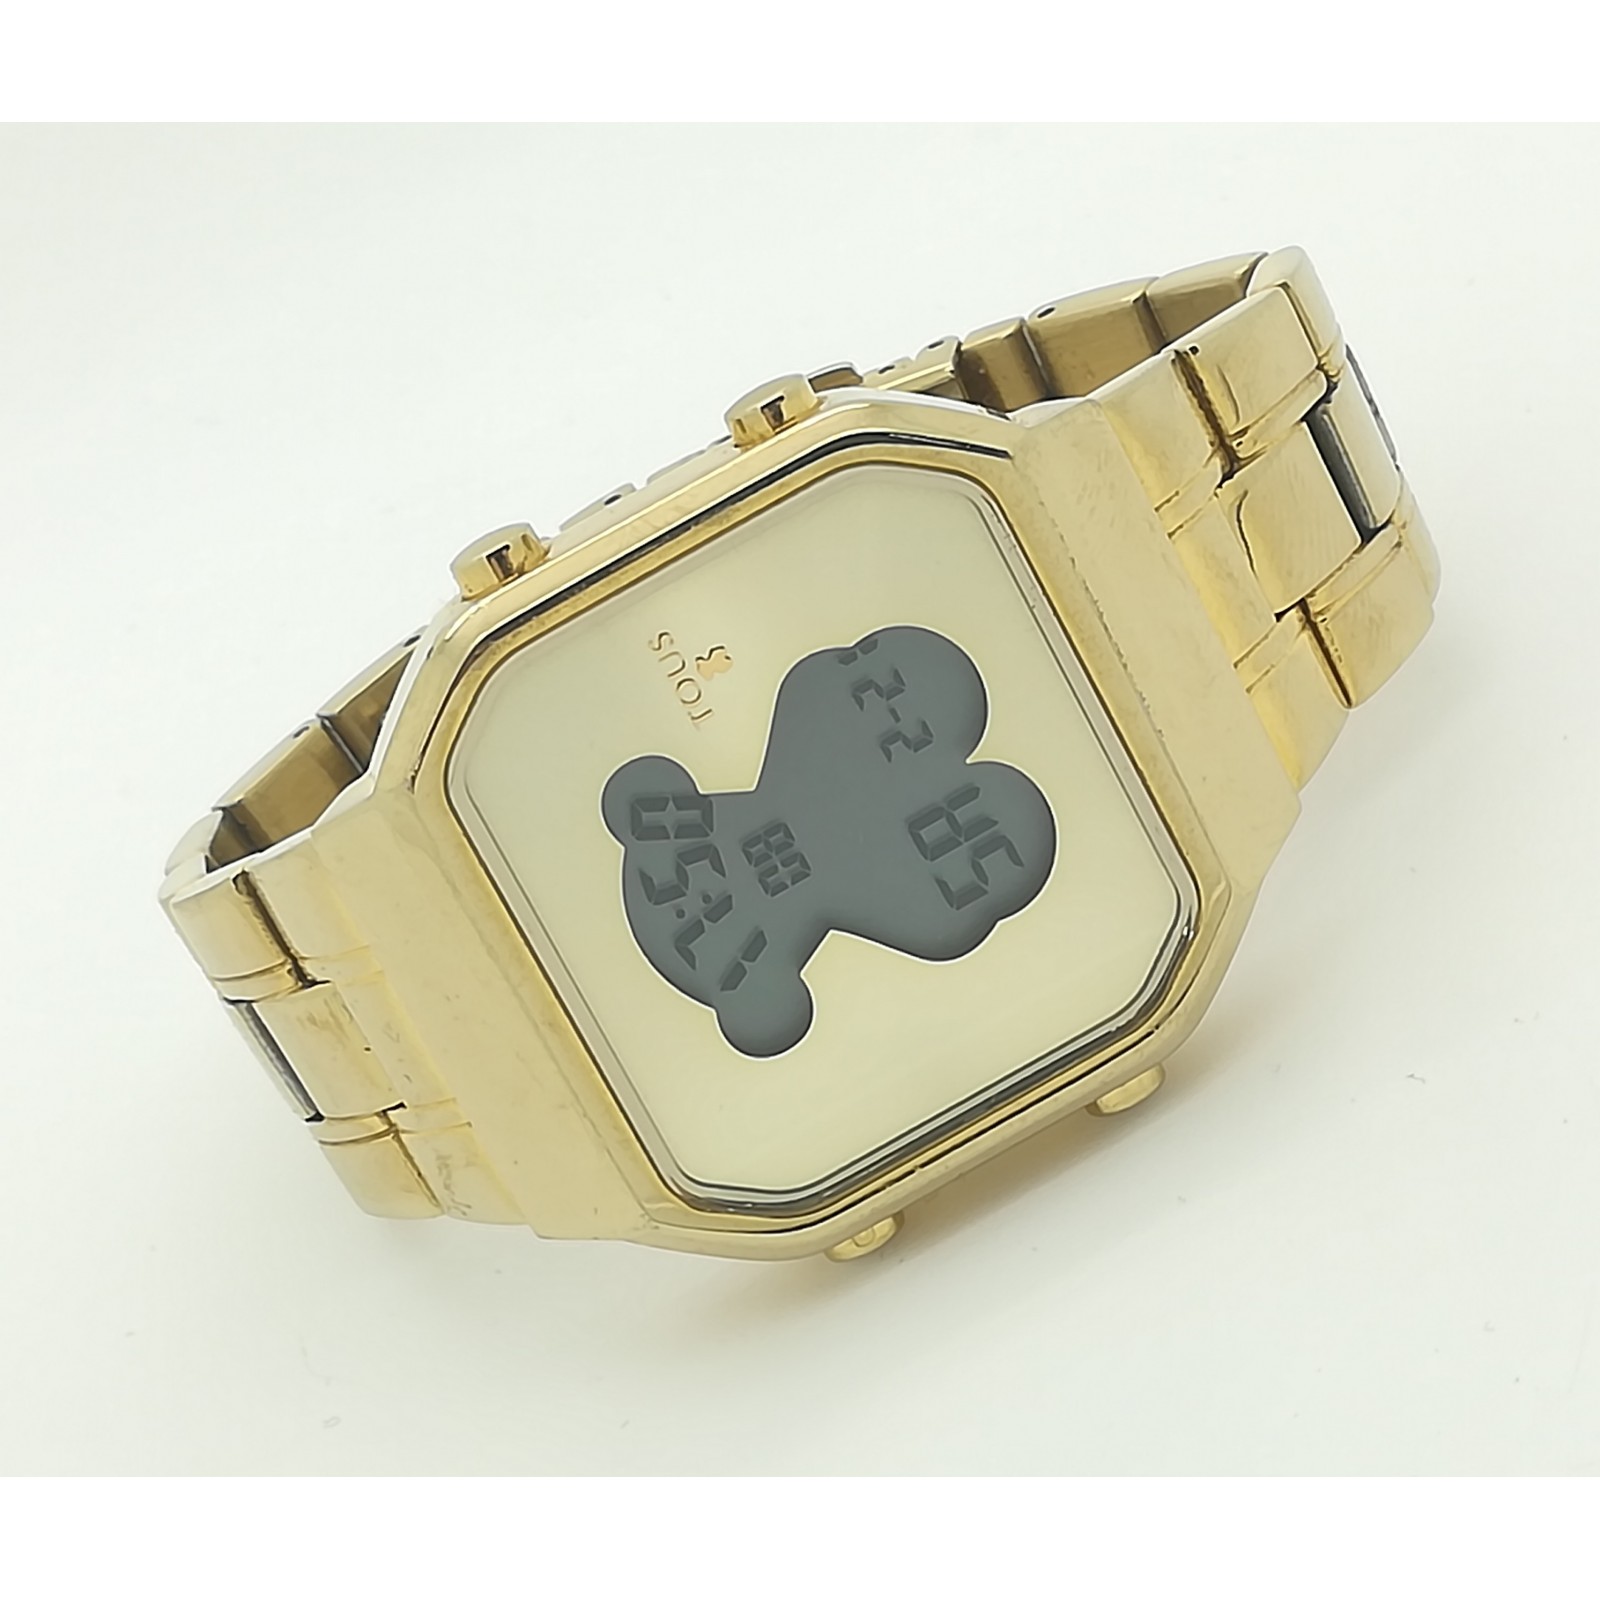 Reloj Tous digital de mujer D-BEAR en acero dorado, de estilo